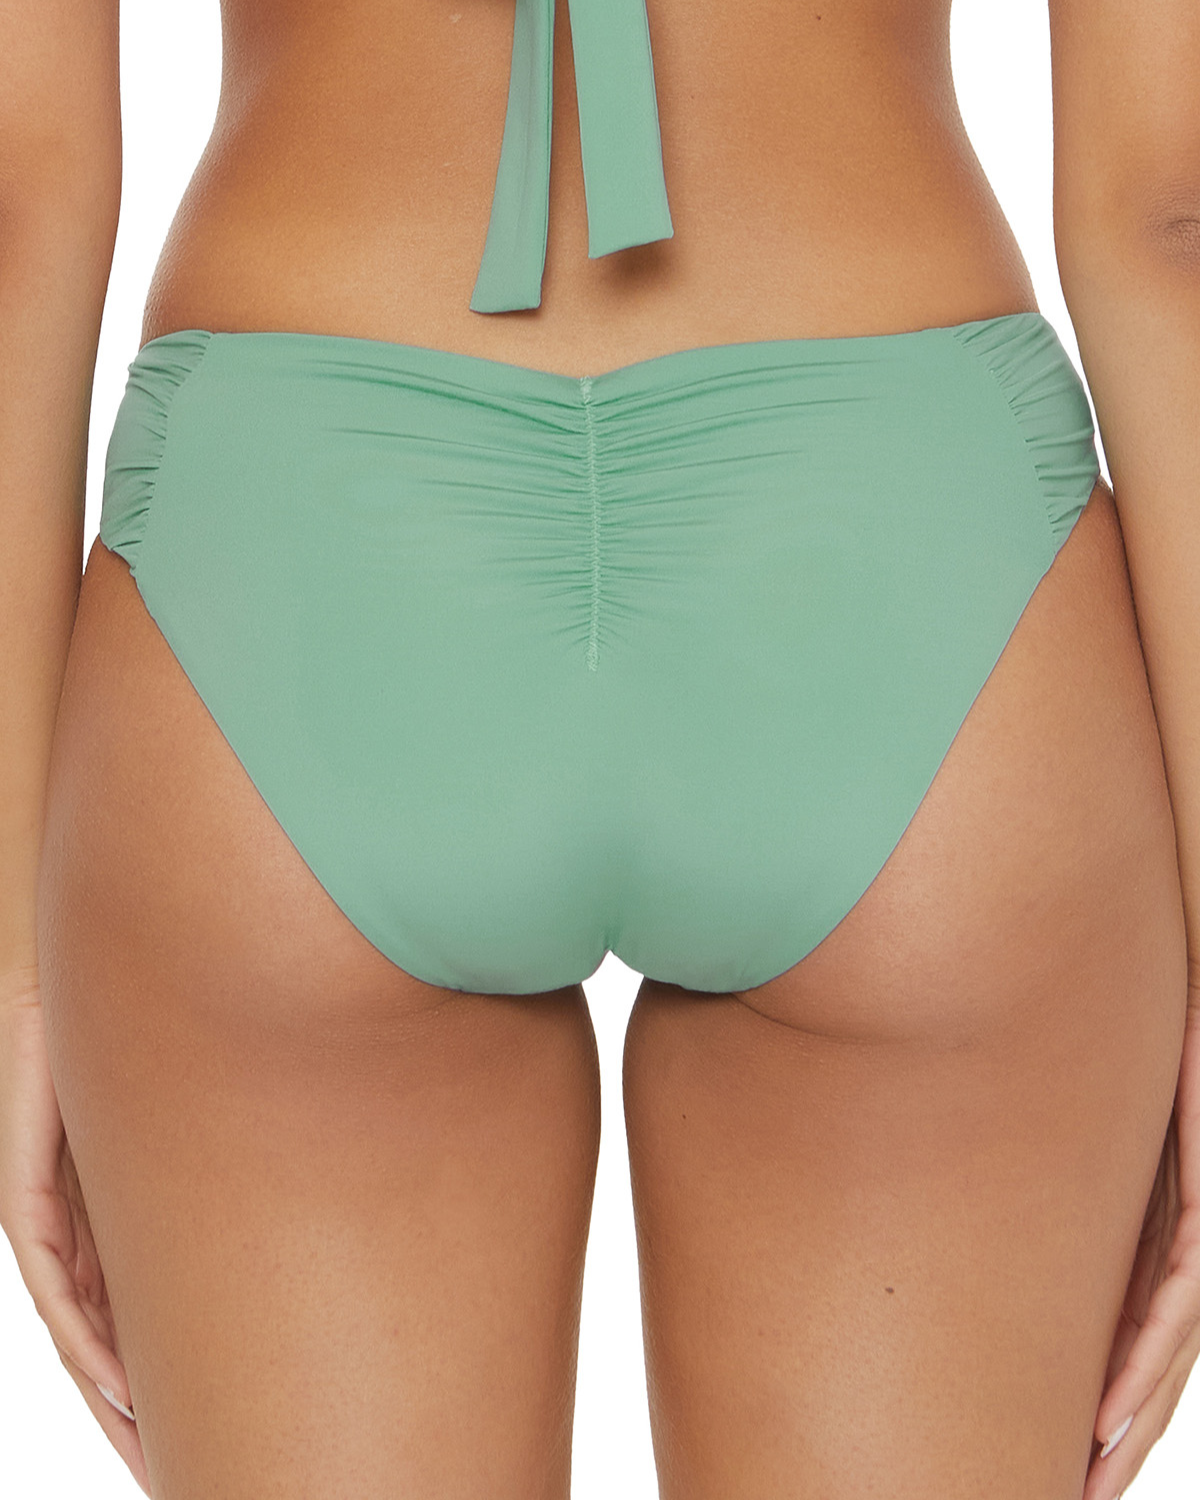 Model wearing hipster bikini bottom in green